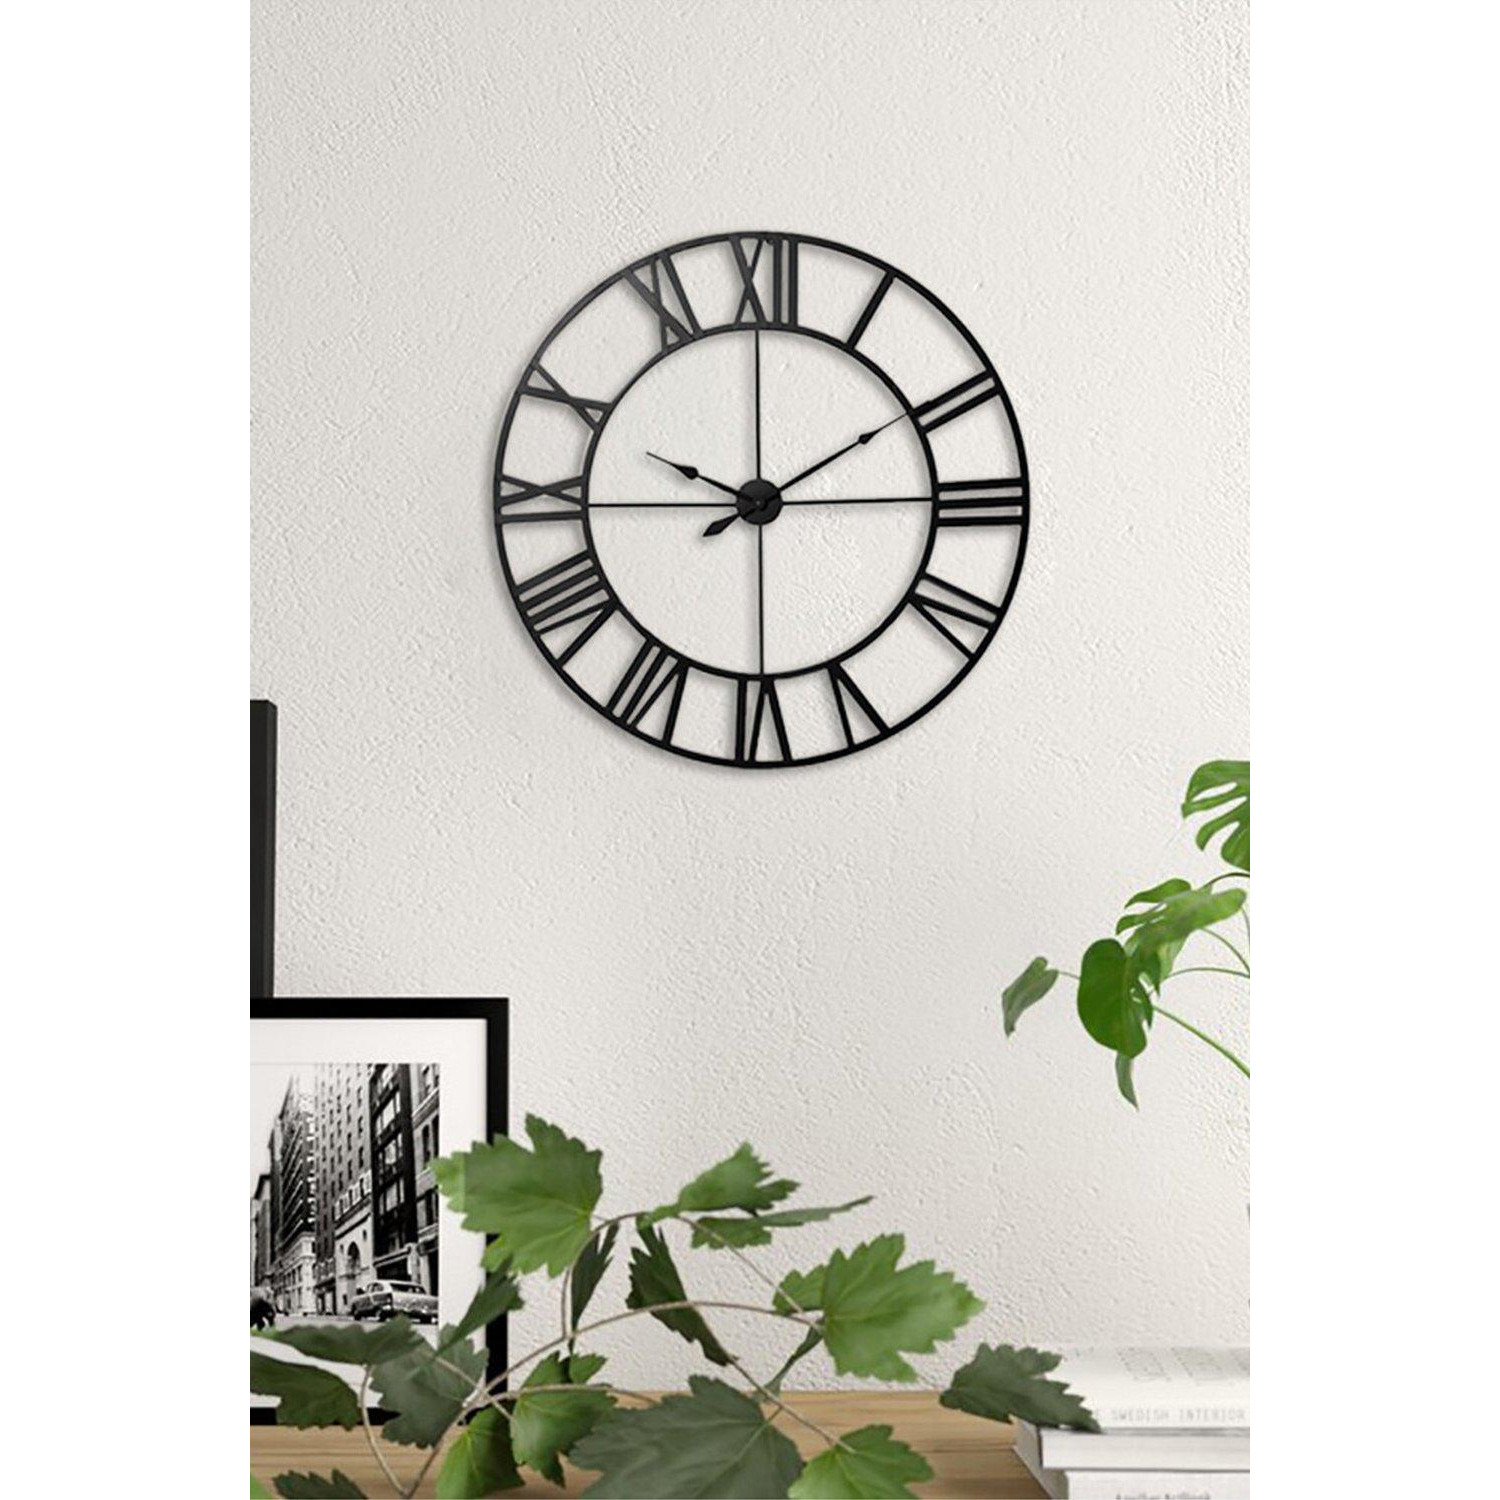 40cm Dia Black Round Roman Numeral Skeleton Metal Wall Clock - image 1